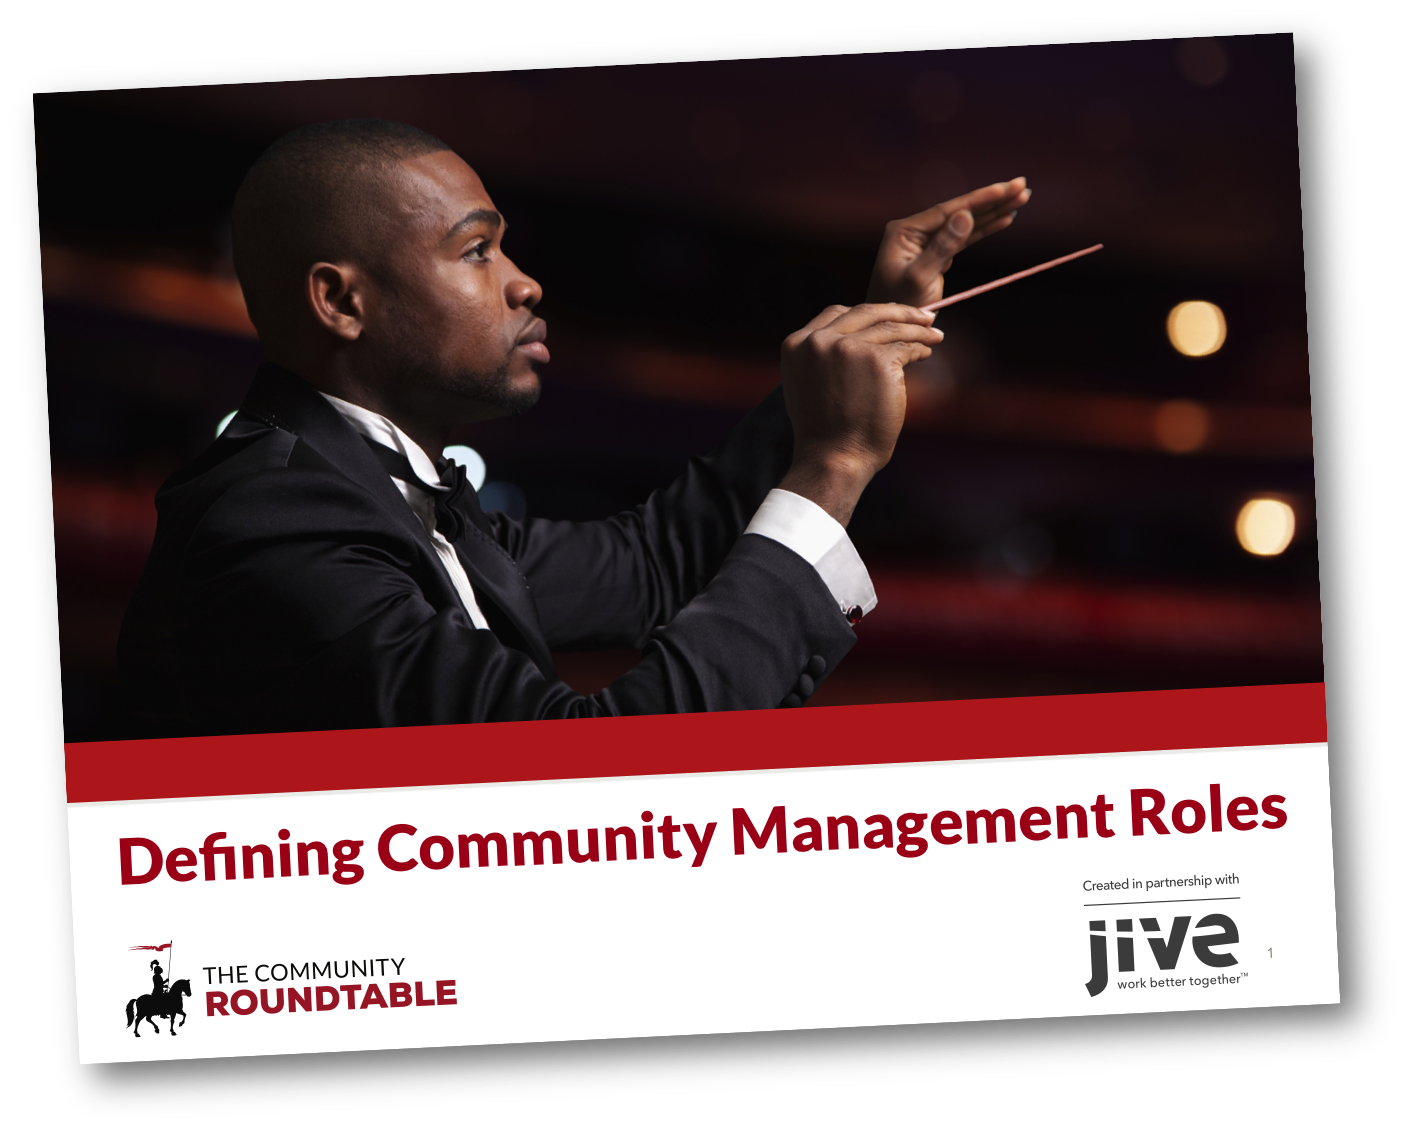 Community Management Roles Responsibilities